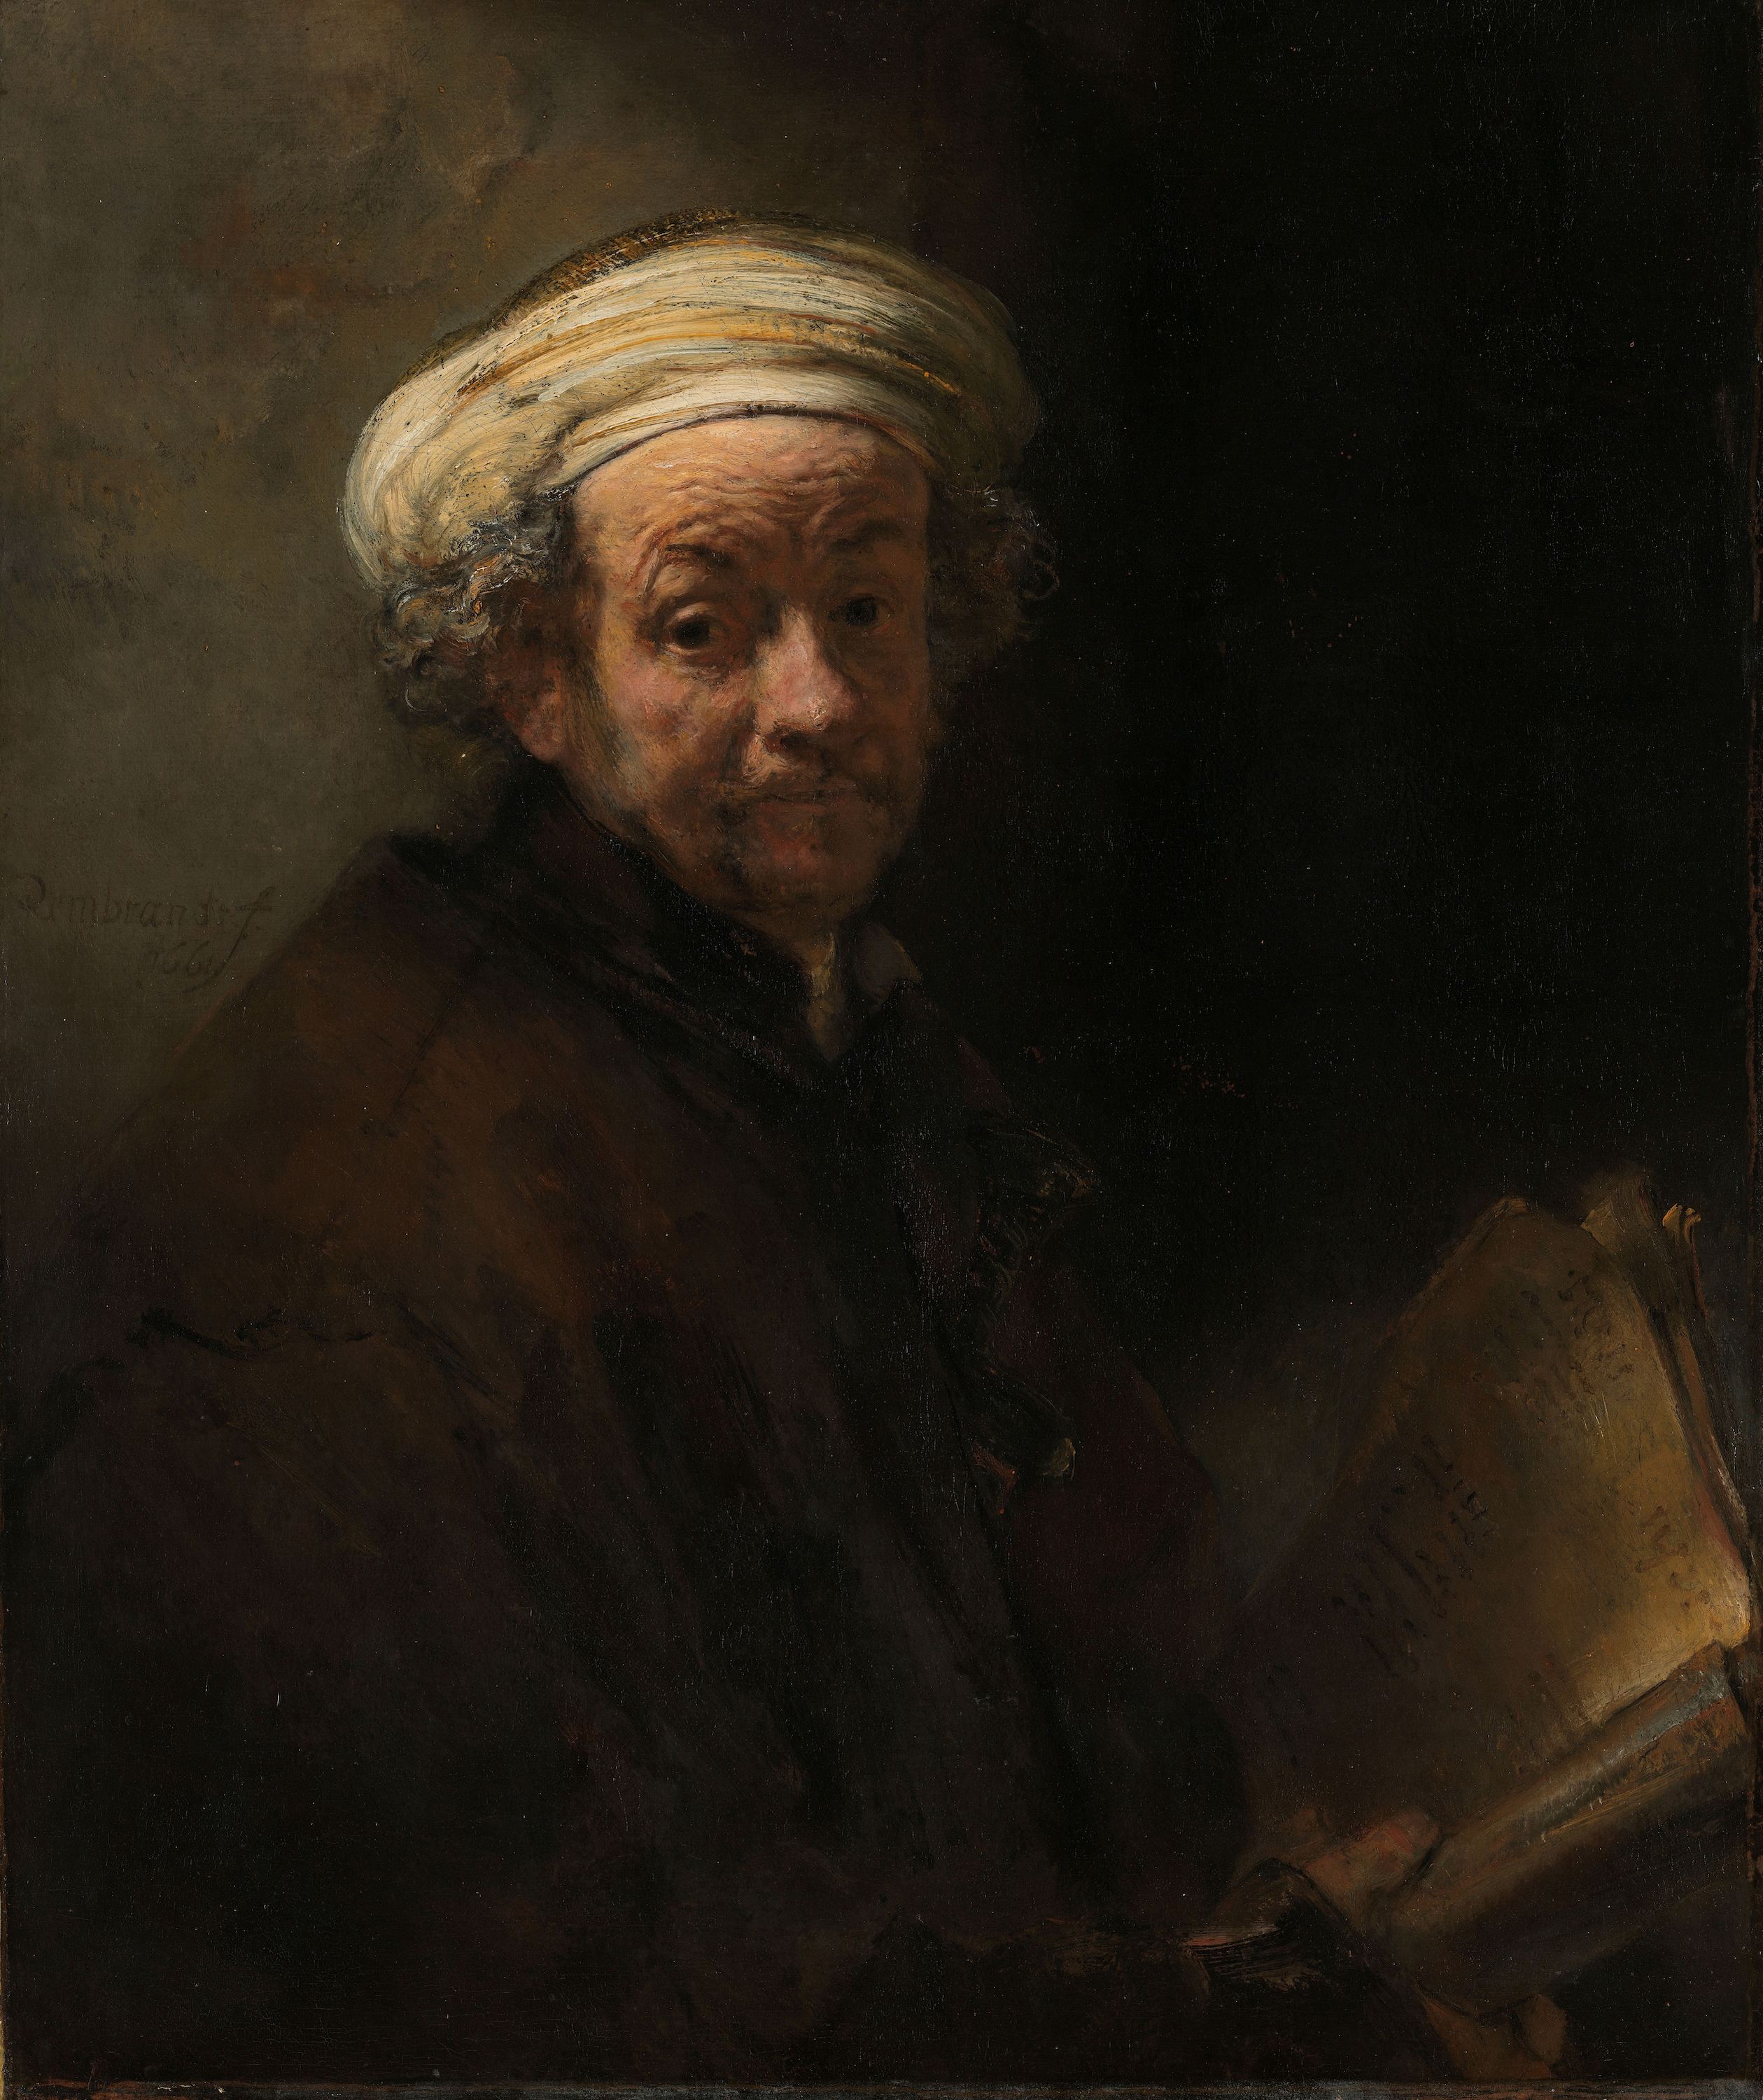 Selbstporträt als Apostel Paulus by Rembrandt van Rijn - 1661 - 91 x 77 cm Rijksmuseum